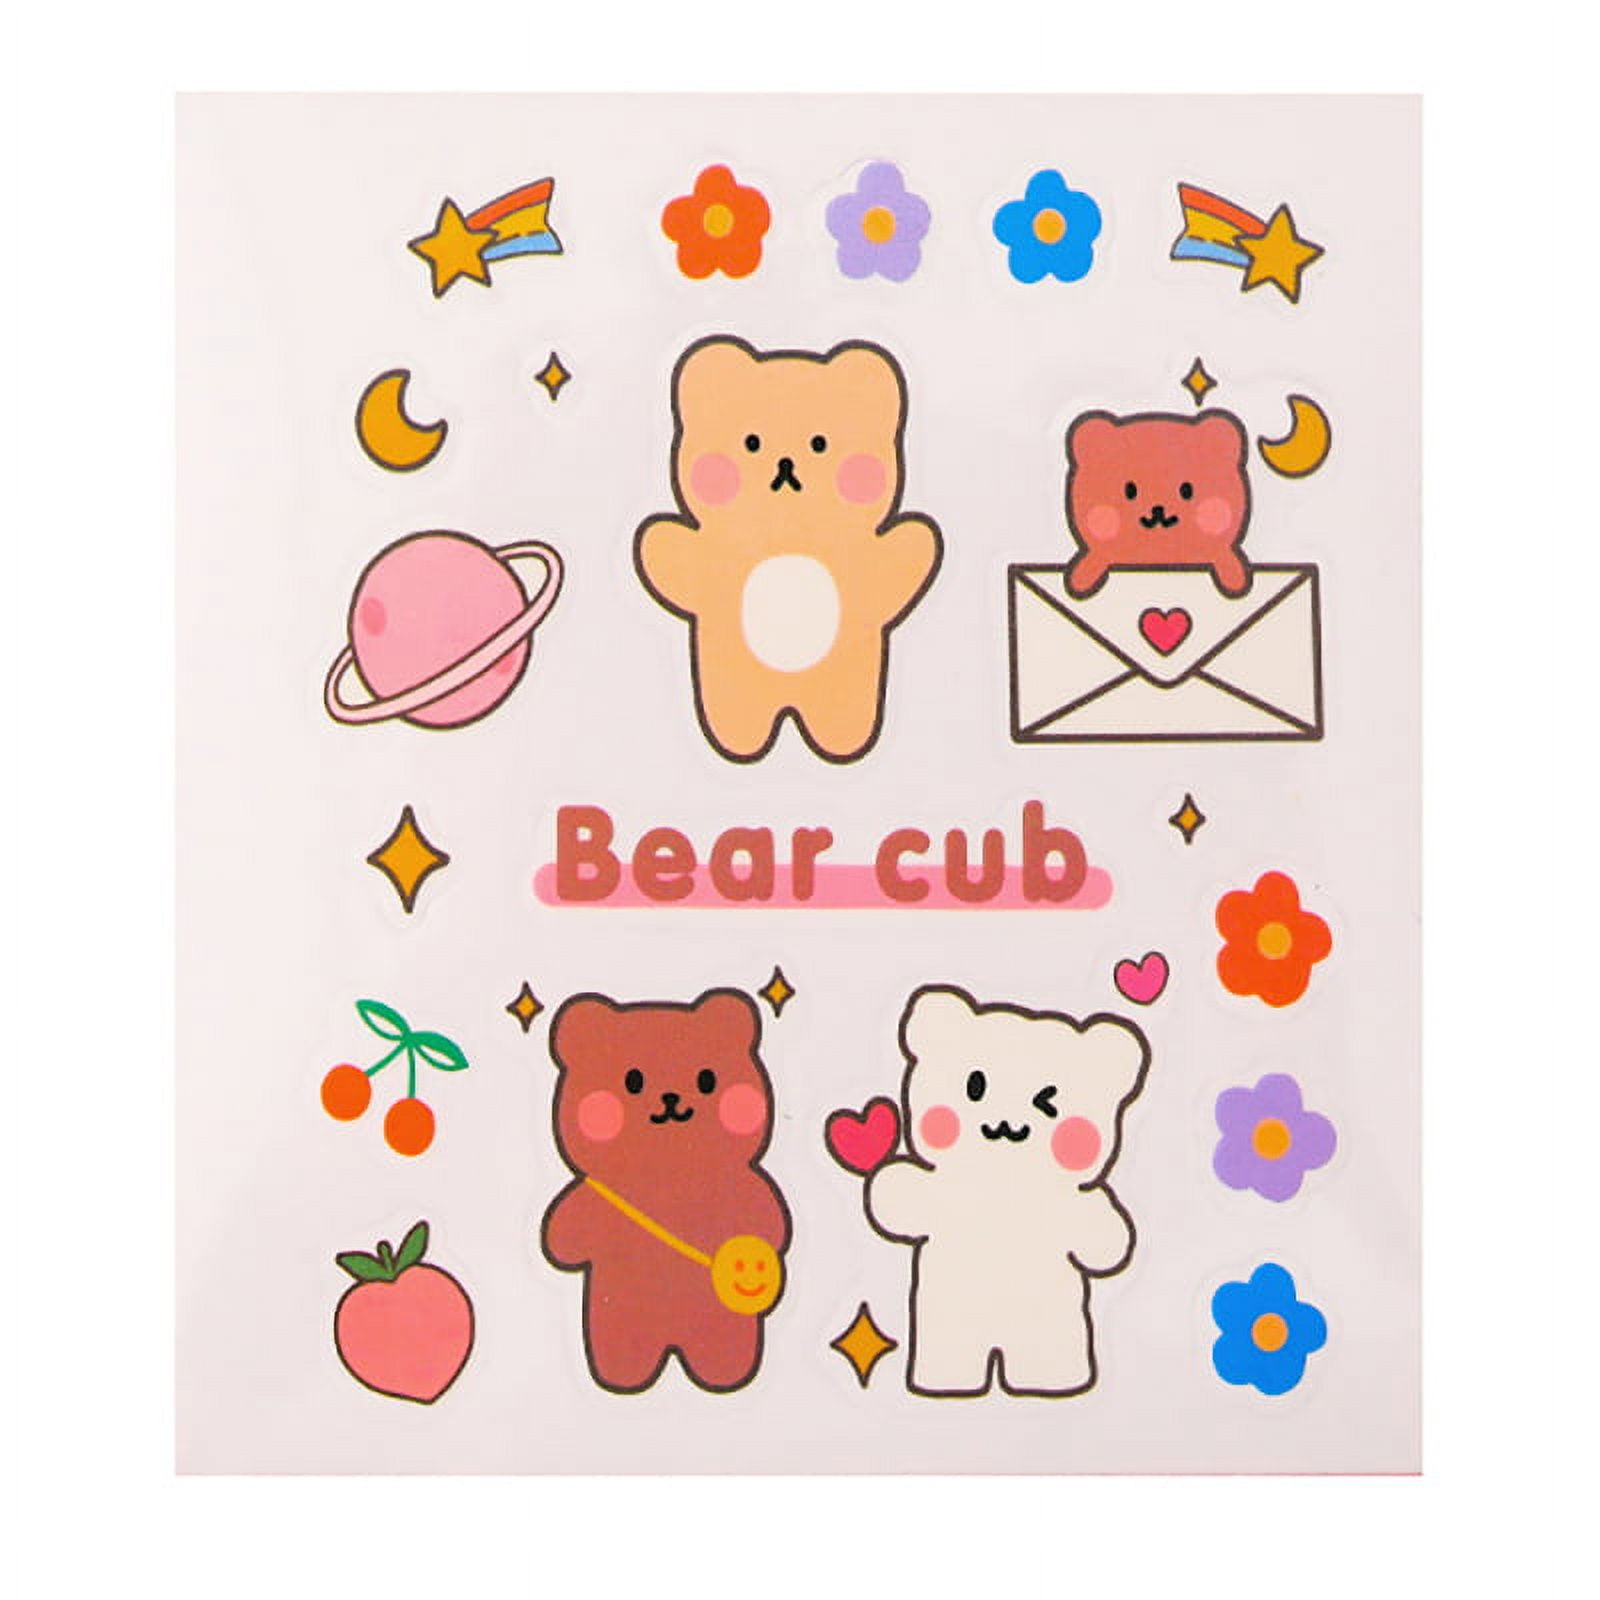 Coofit Journal Stickers Cartoon DIY Cute Planner Stickers Kawaii Scrapbook Stickers for Women Girls, Size: 10*8.5cm(3.94*3.34in), Multicolor